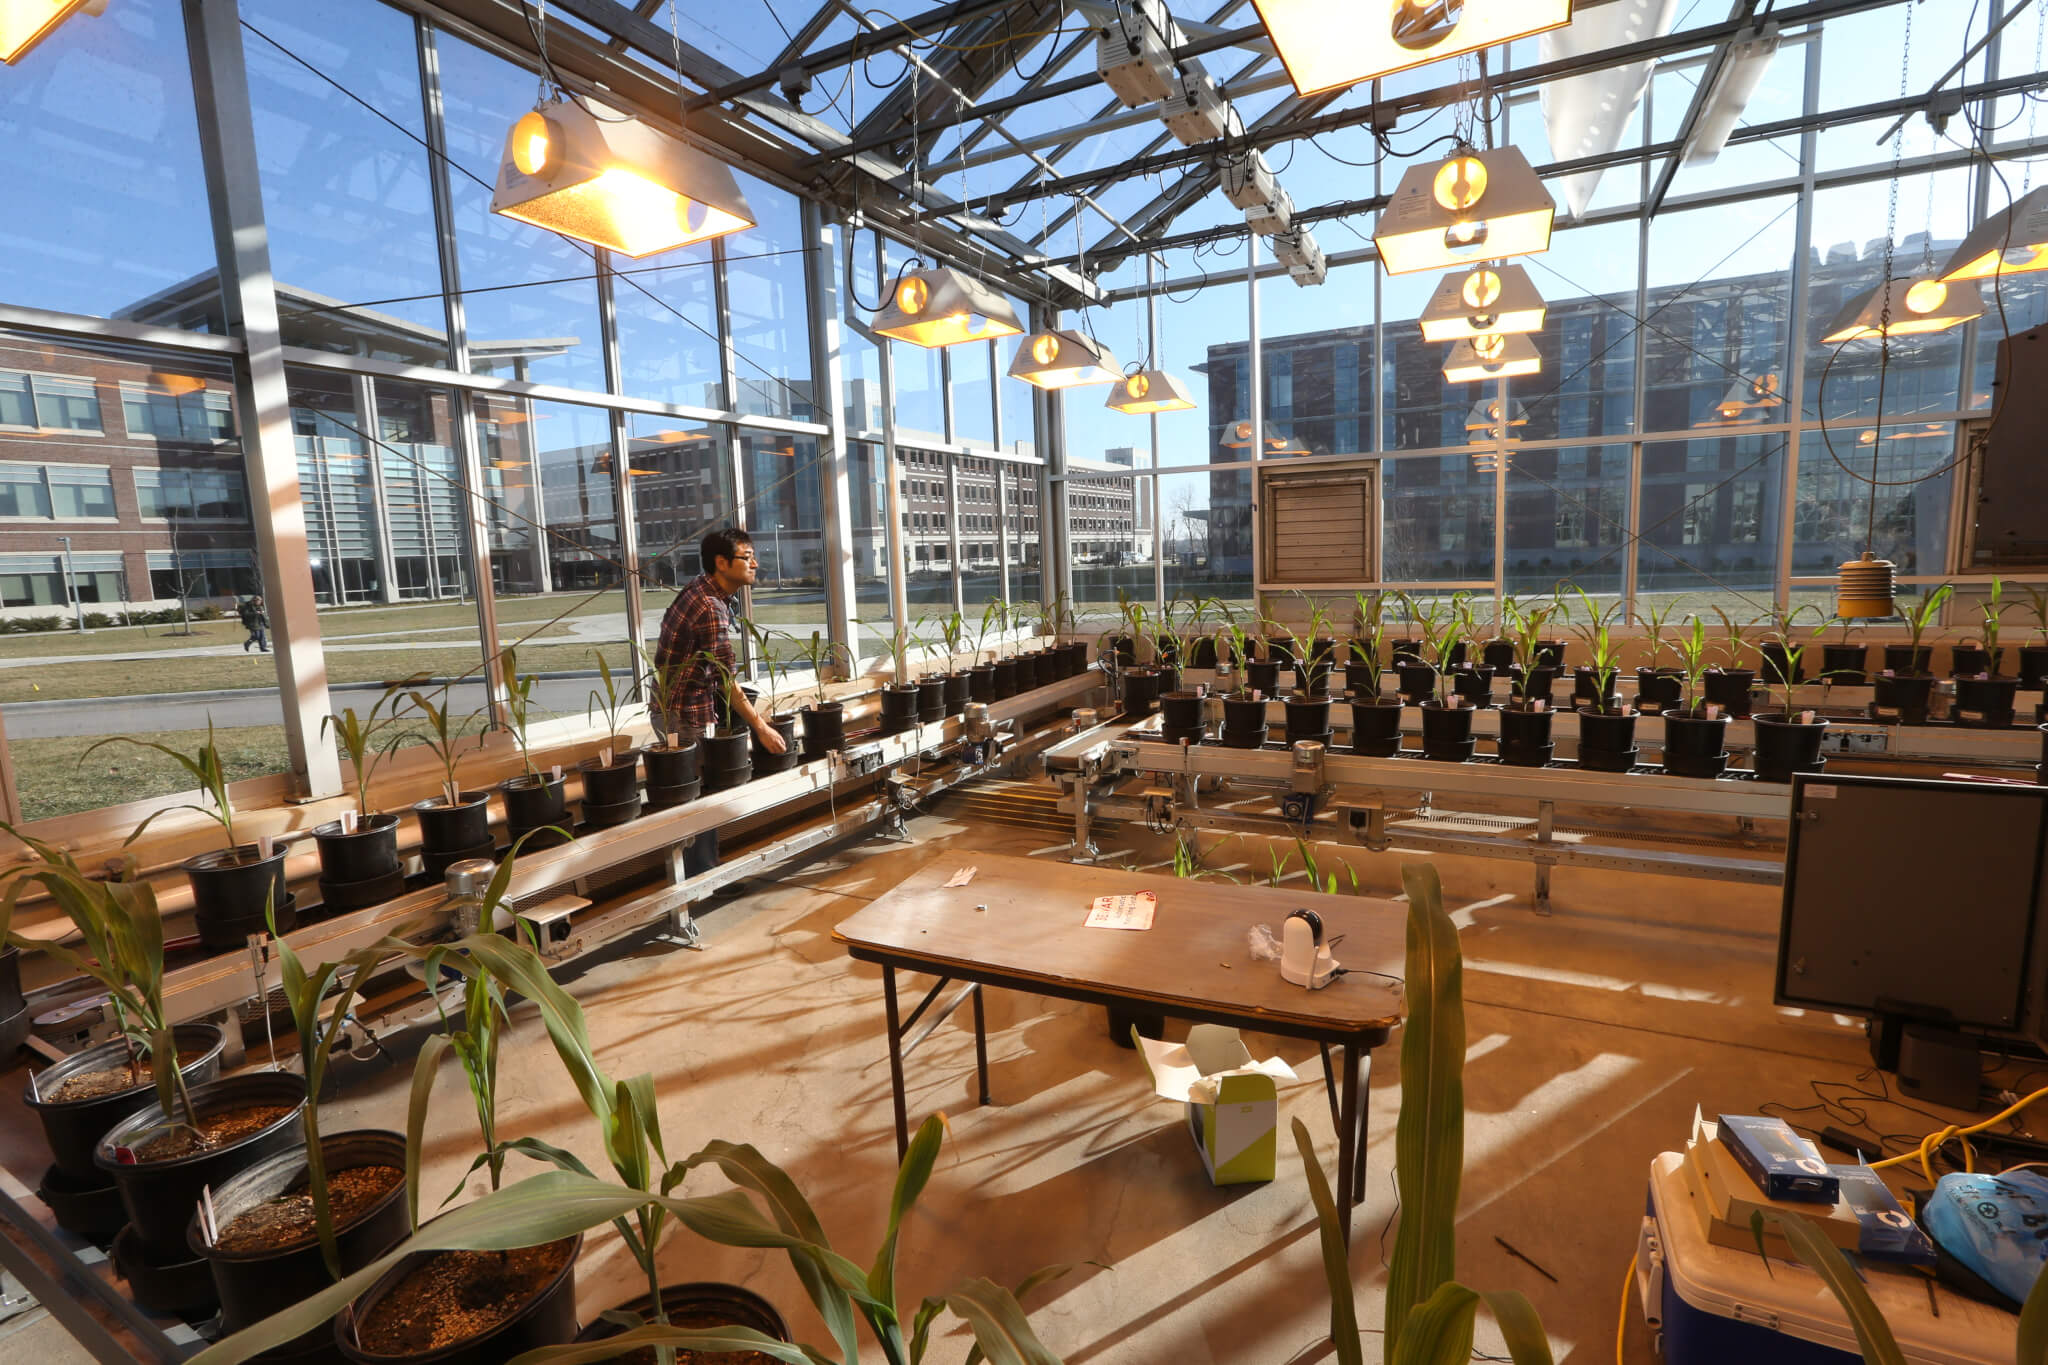 Corn plants inside a green house